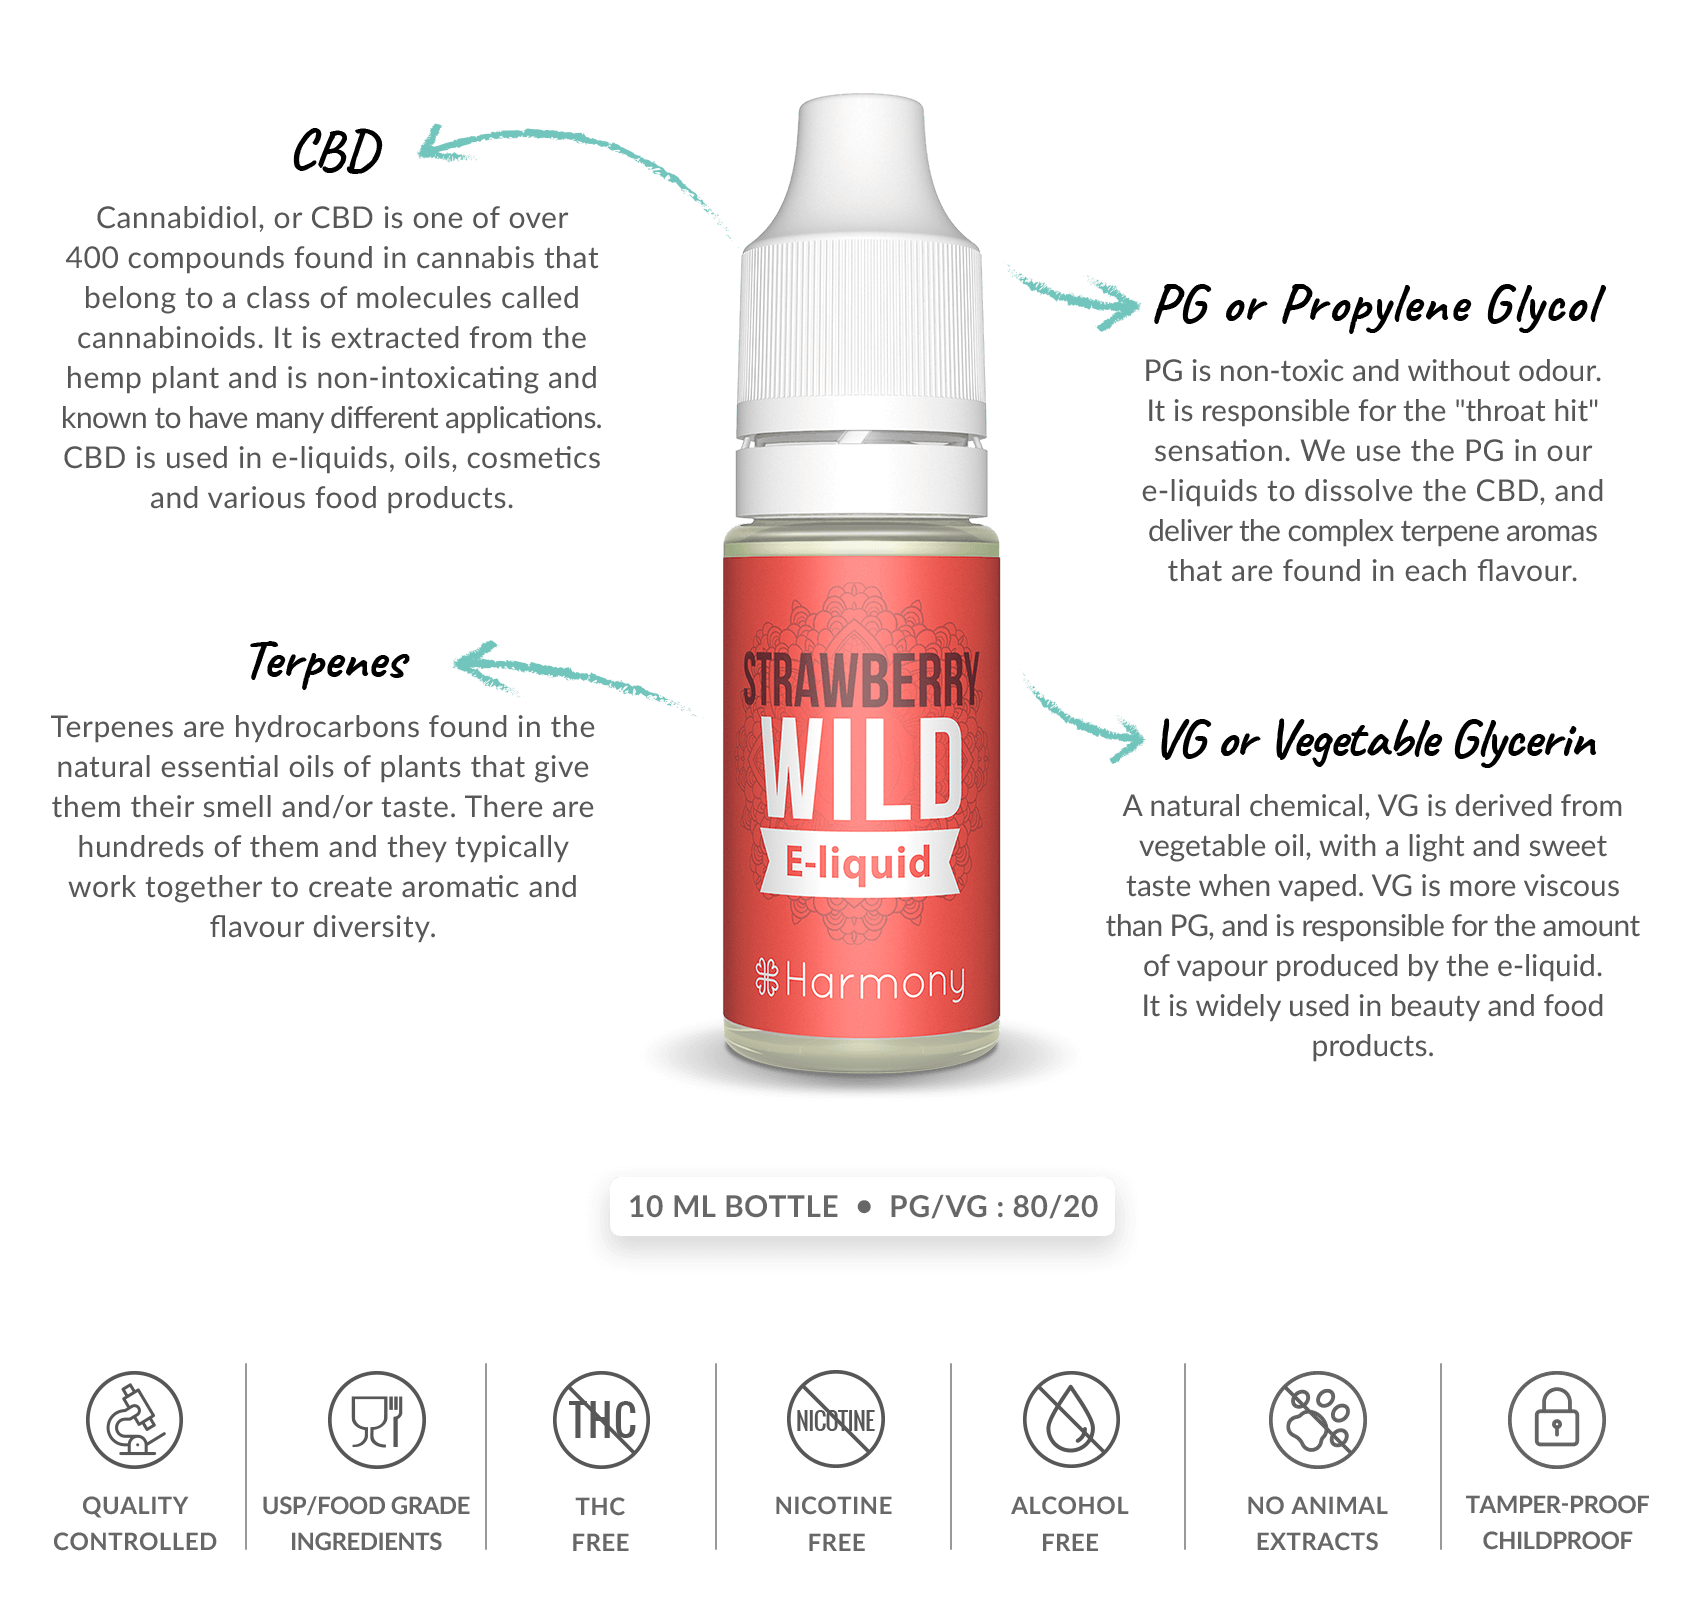 What's inside wild strawberry cbd e-liquid